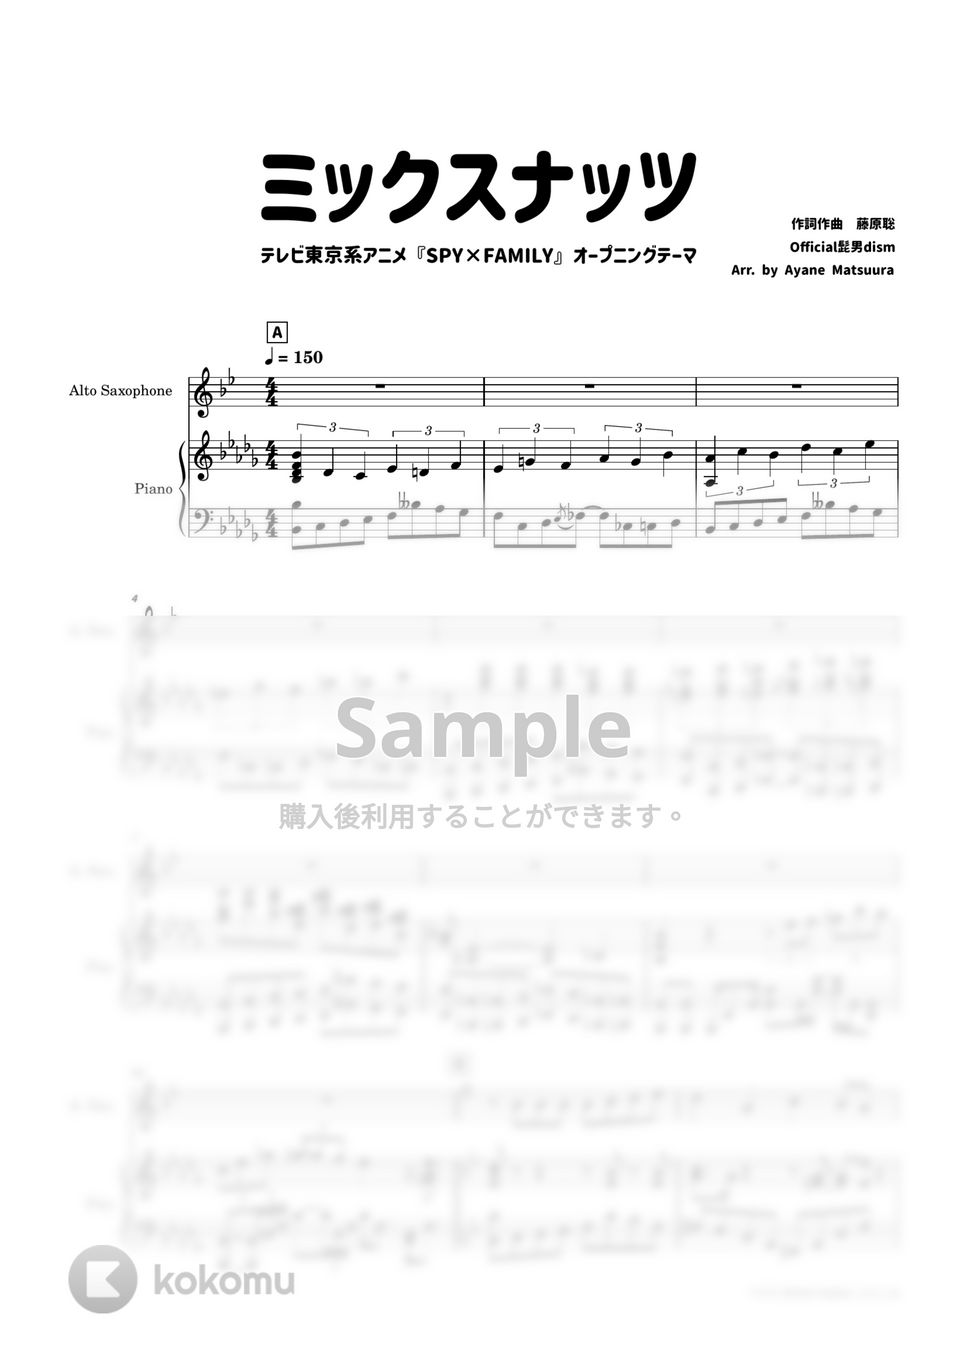 Official髭男dism - 【アルトサックス＆ピアノ】#1♭2ミックスナッツ（Official髭男dism） by 管楽器の楽譜★ふるすこあ